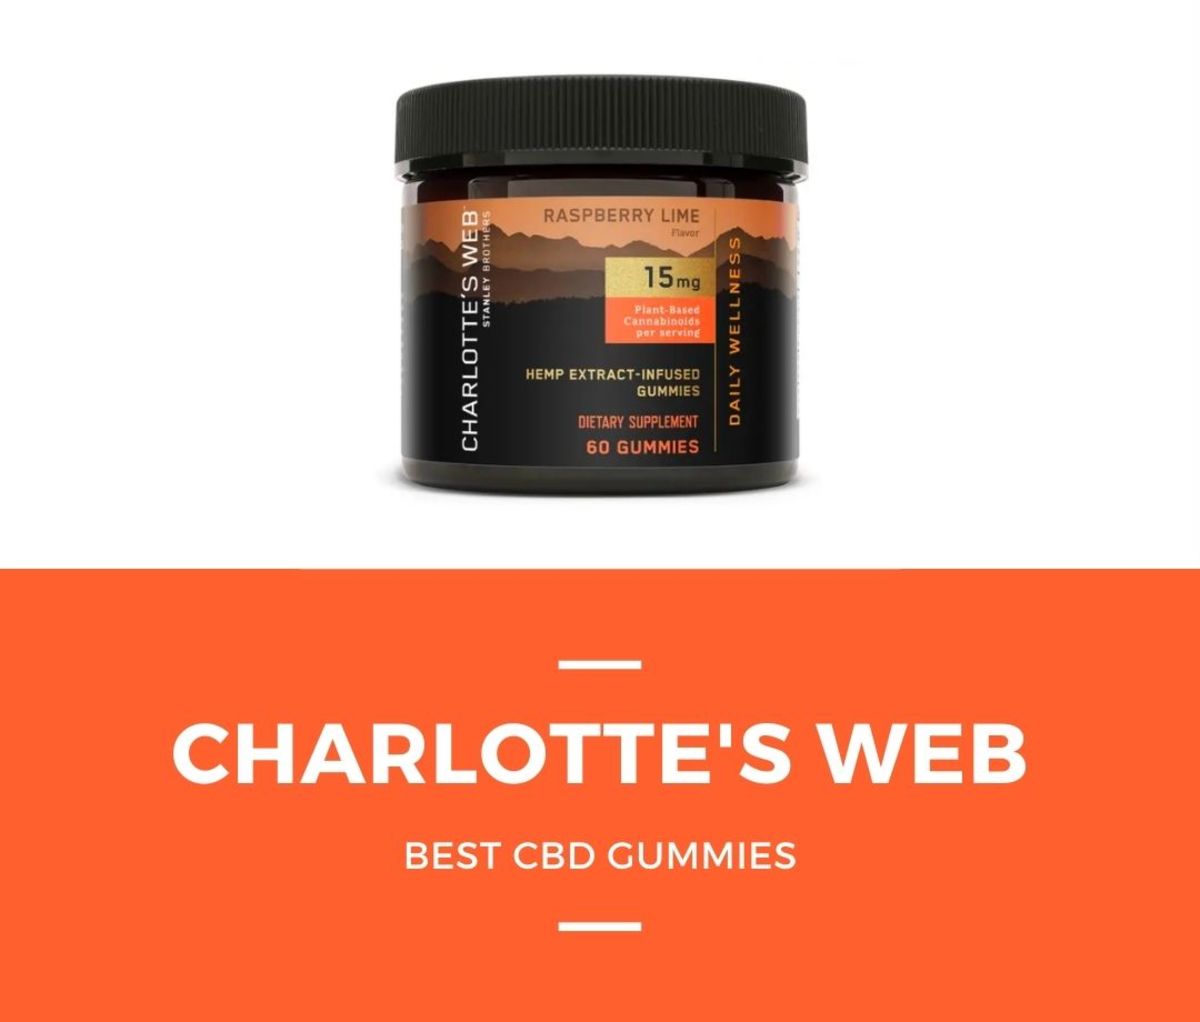 8. Charlotte’s Web – Most Reputable Company